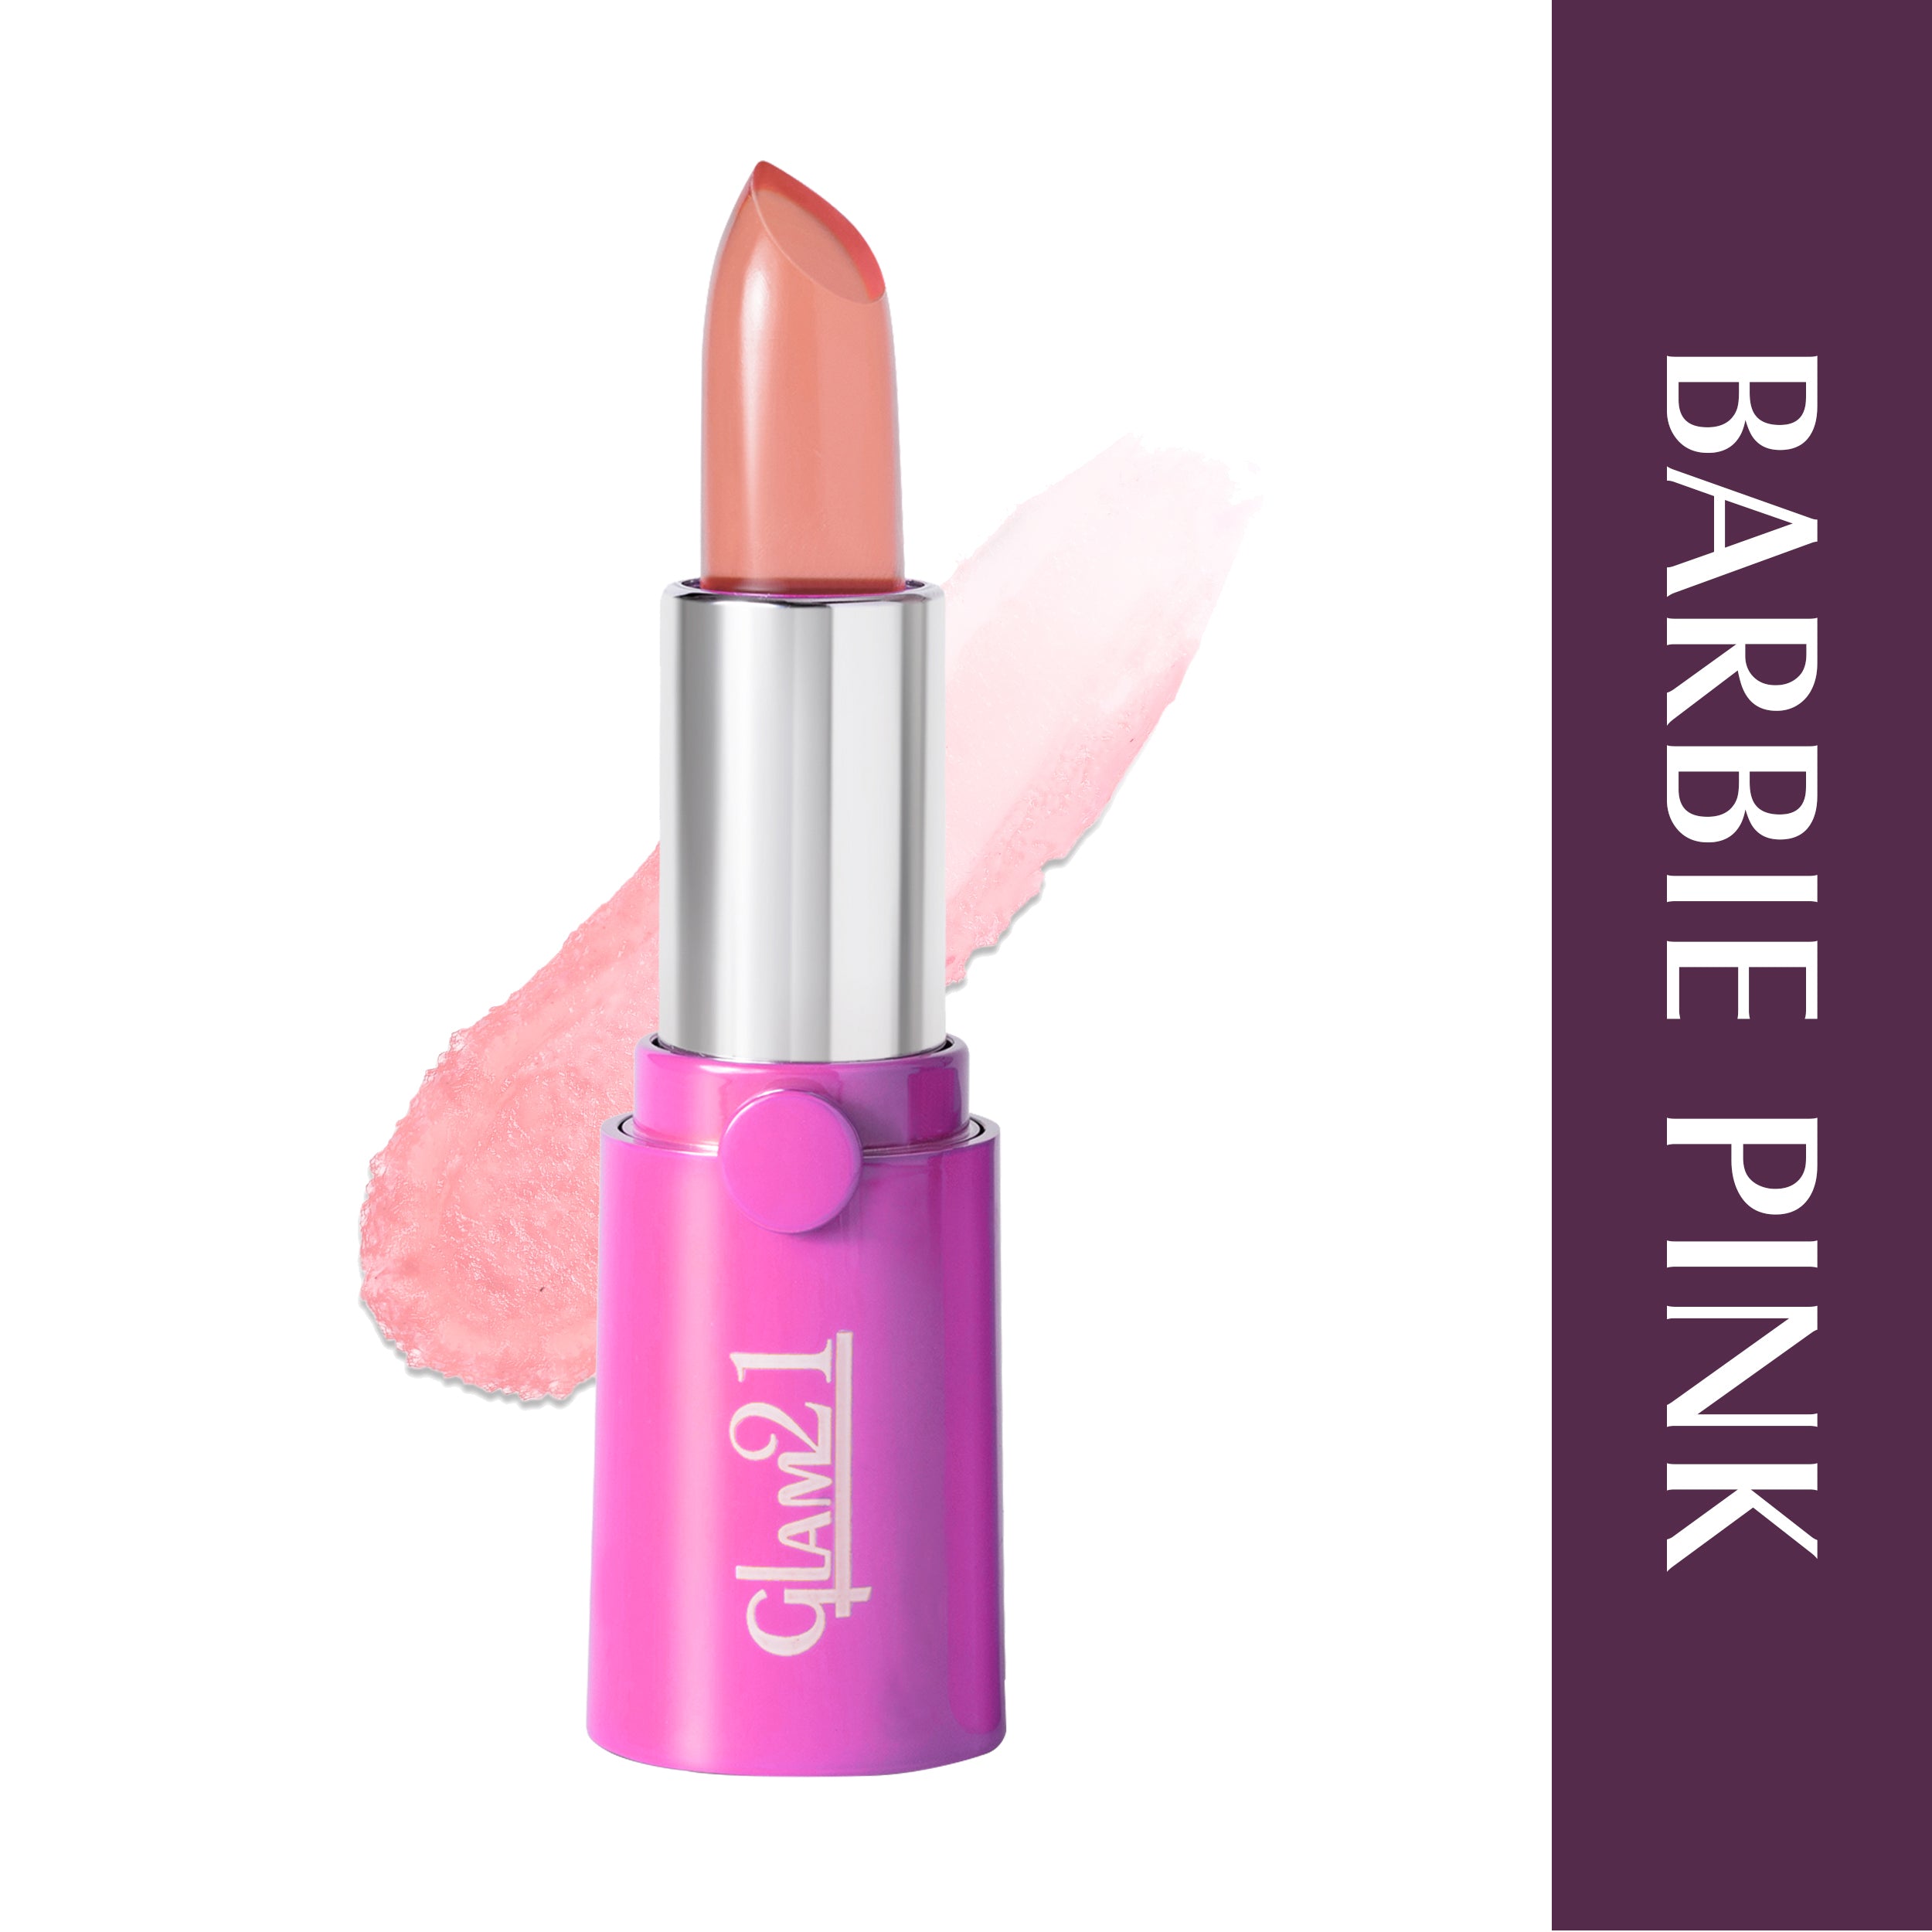 Glam21 Gel Based Ultra-Moisturizing Lightweighted Lipstick with Glossy Shine Formula (Barbie Pink, 3.6 g)